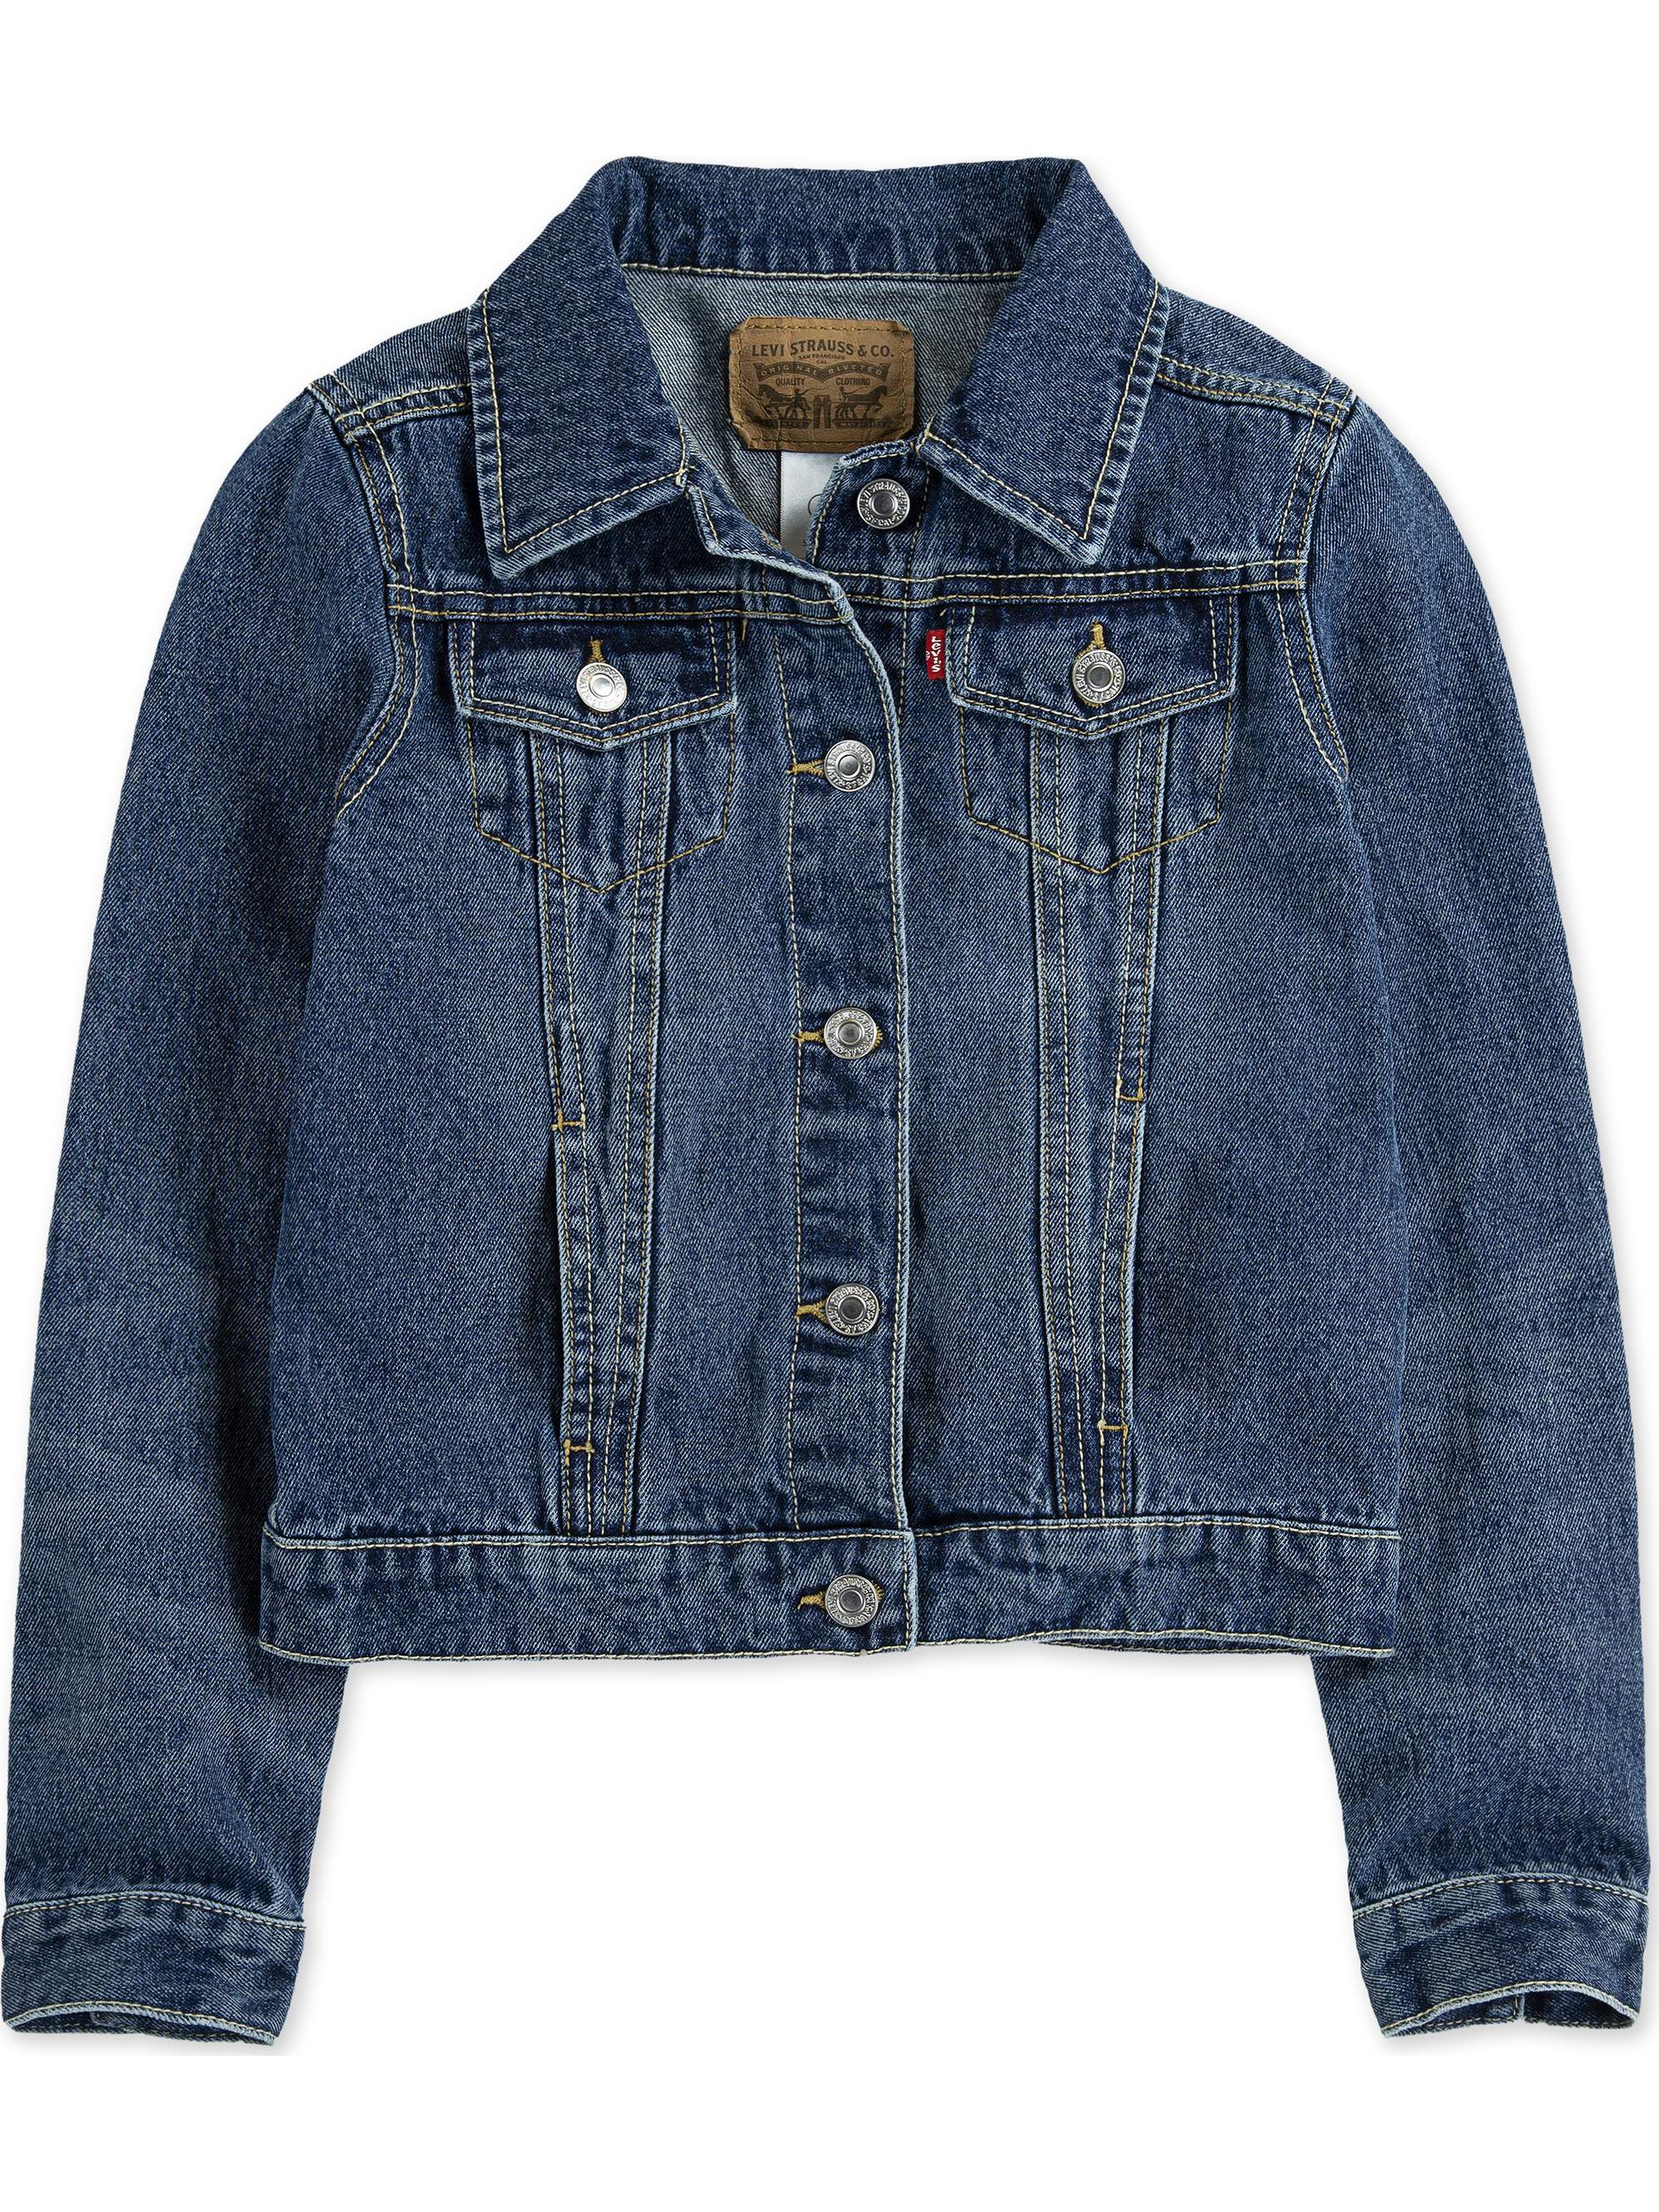 Levi's Girls' Denim Trucker Jacket, Sizes 4-16 - image 1 of 7